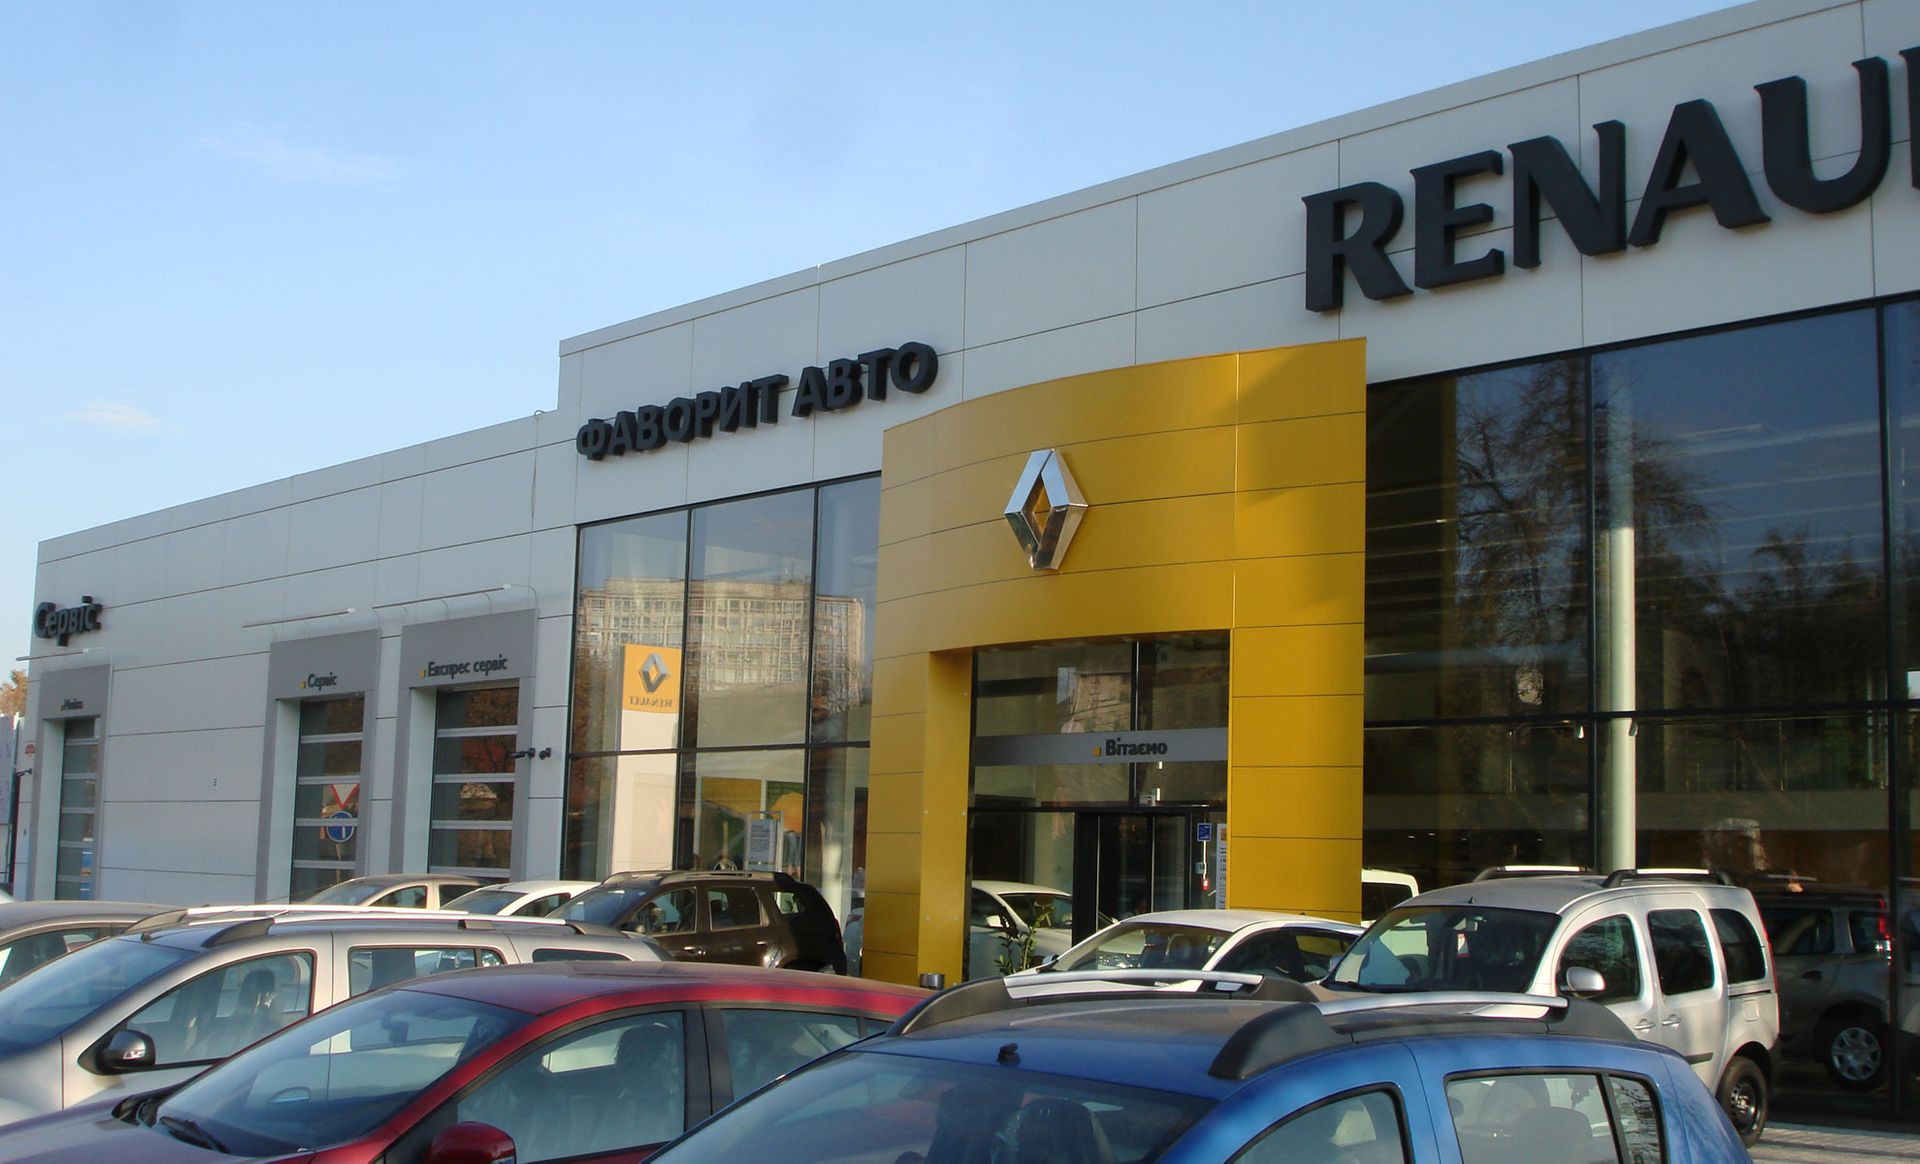 Renault – Фаворит Авто Винница